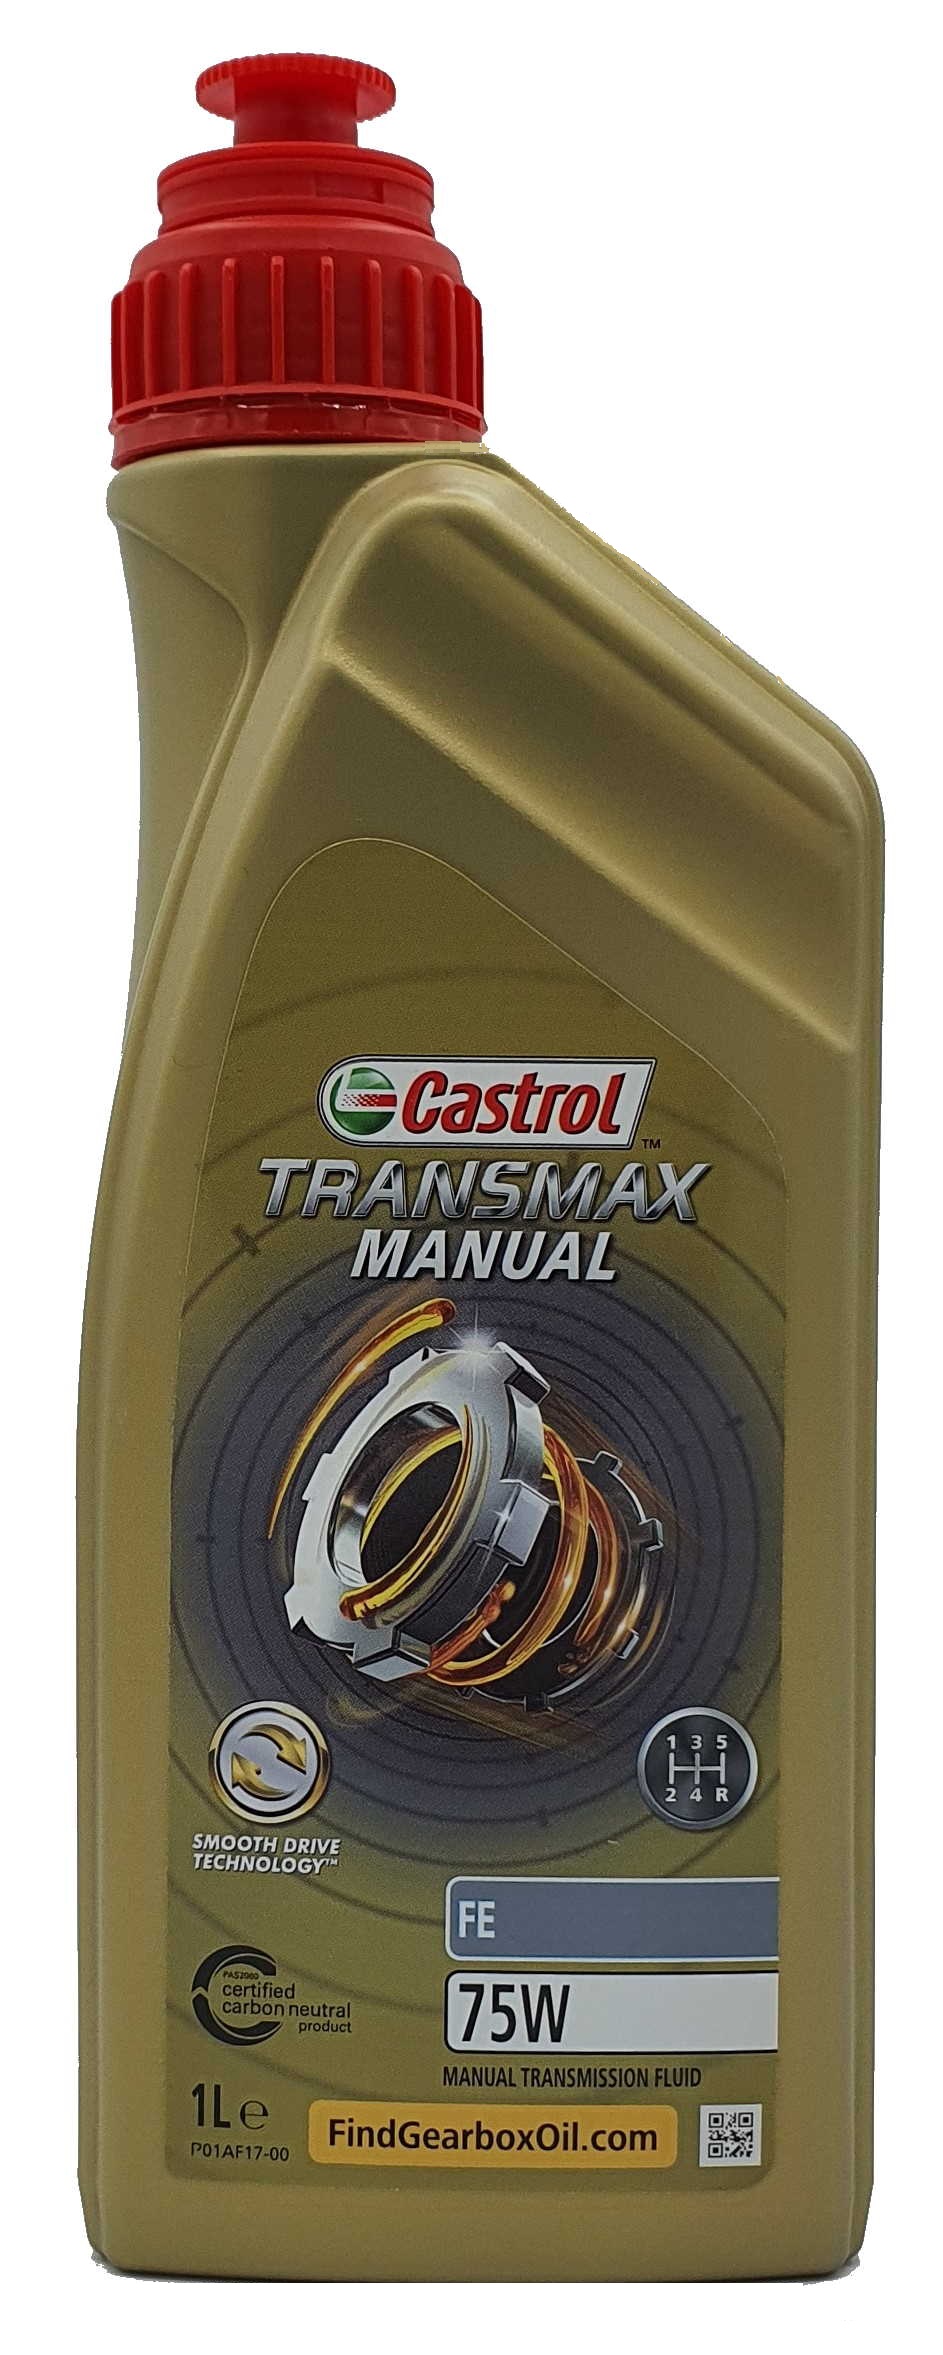 Castrol Transmax Manual FE 75W 1 Liter